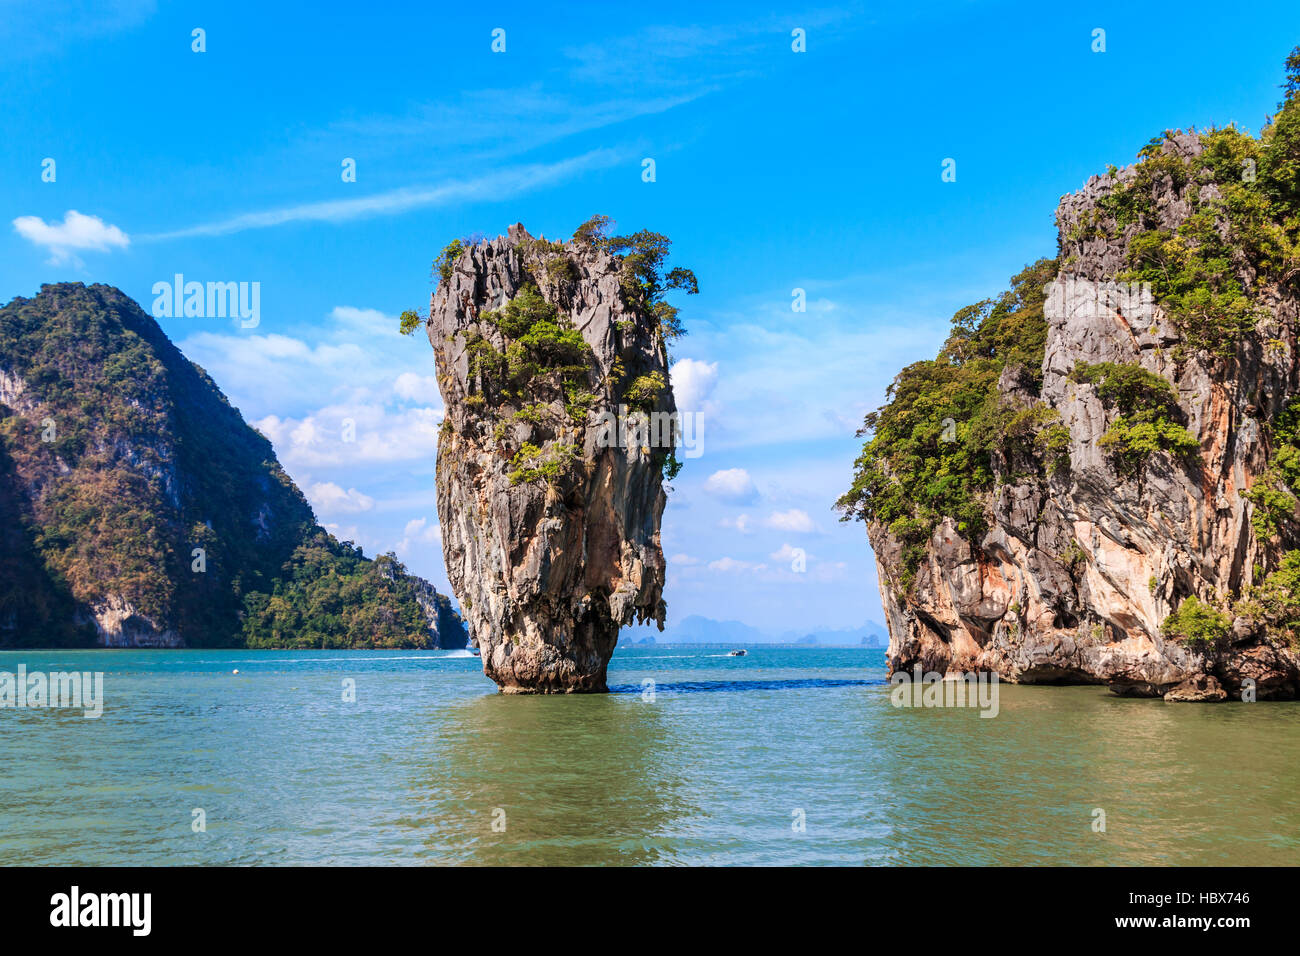 Thailand, Krabi. James Bond Island in Phang Nga Bay. Stock Photo